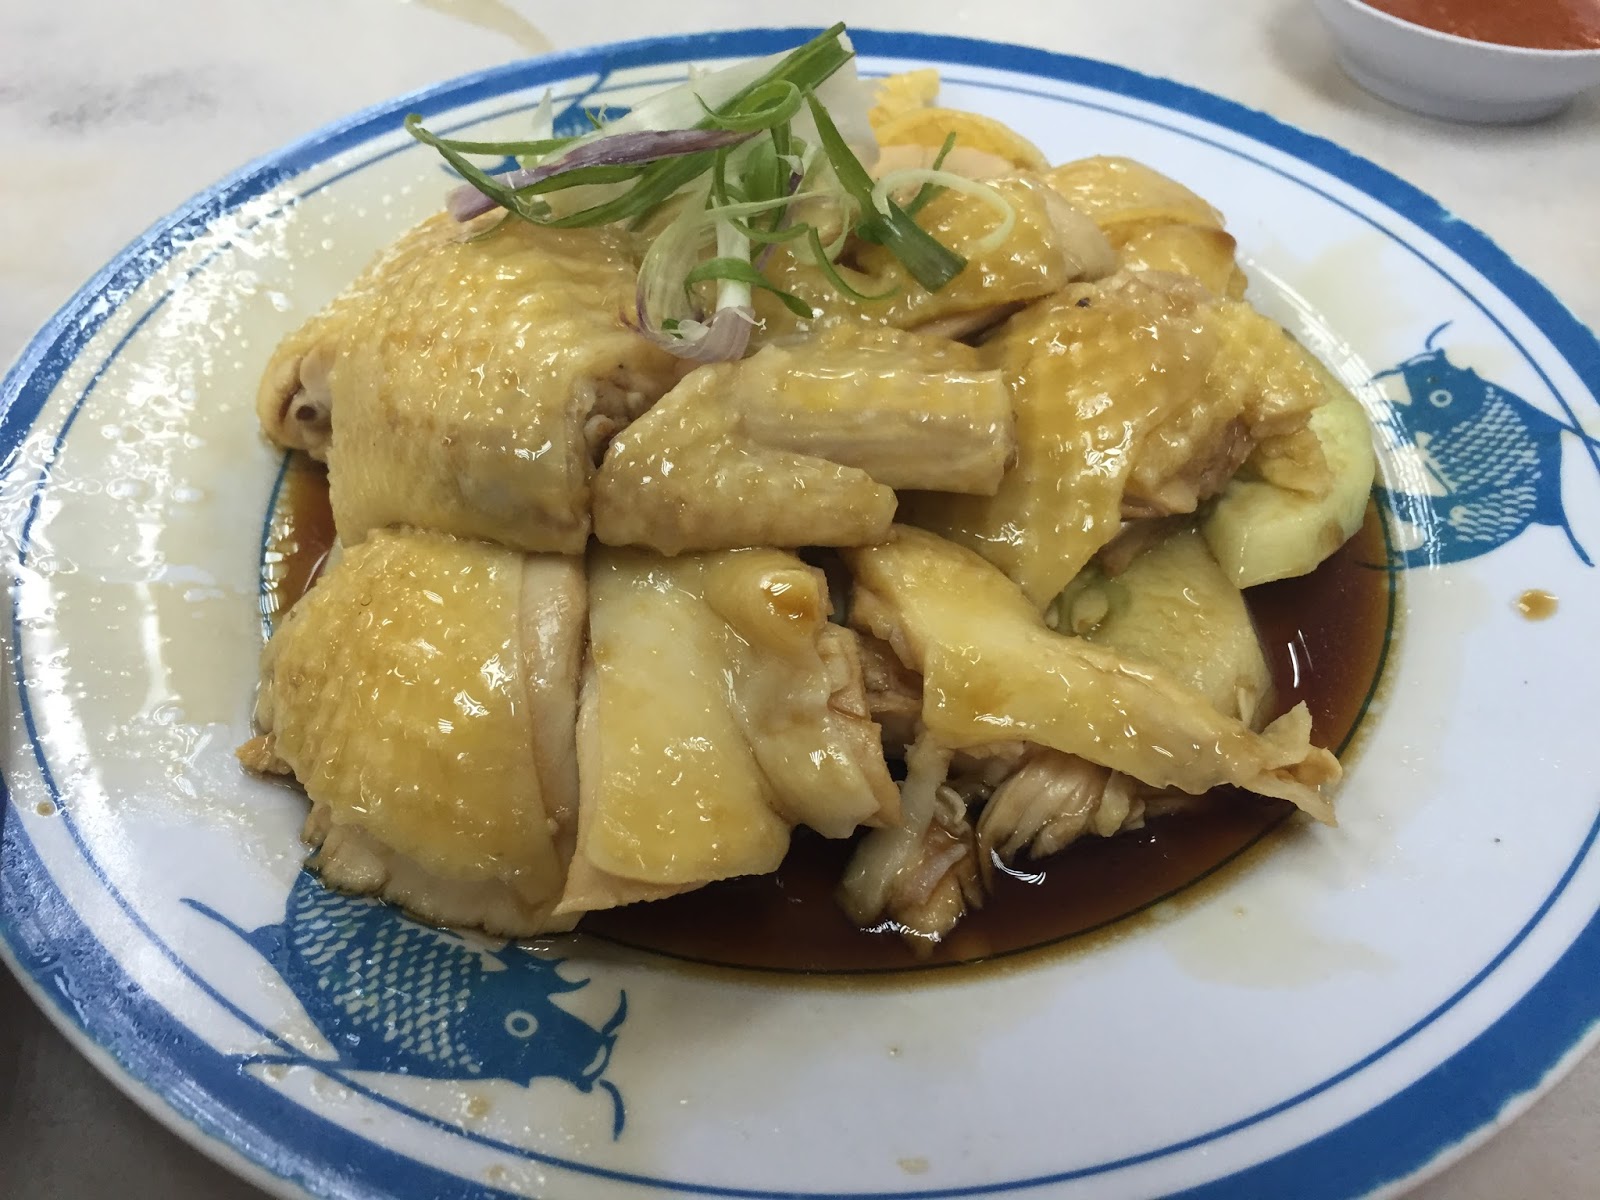 food+road trip: New Restaurant Ipoh Chicken Rice @ Jalan Gasing